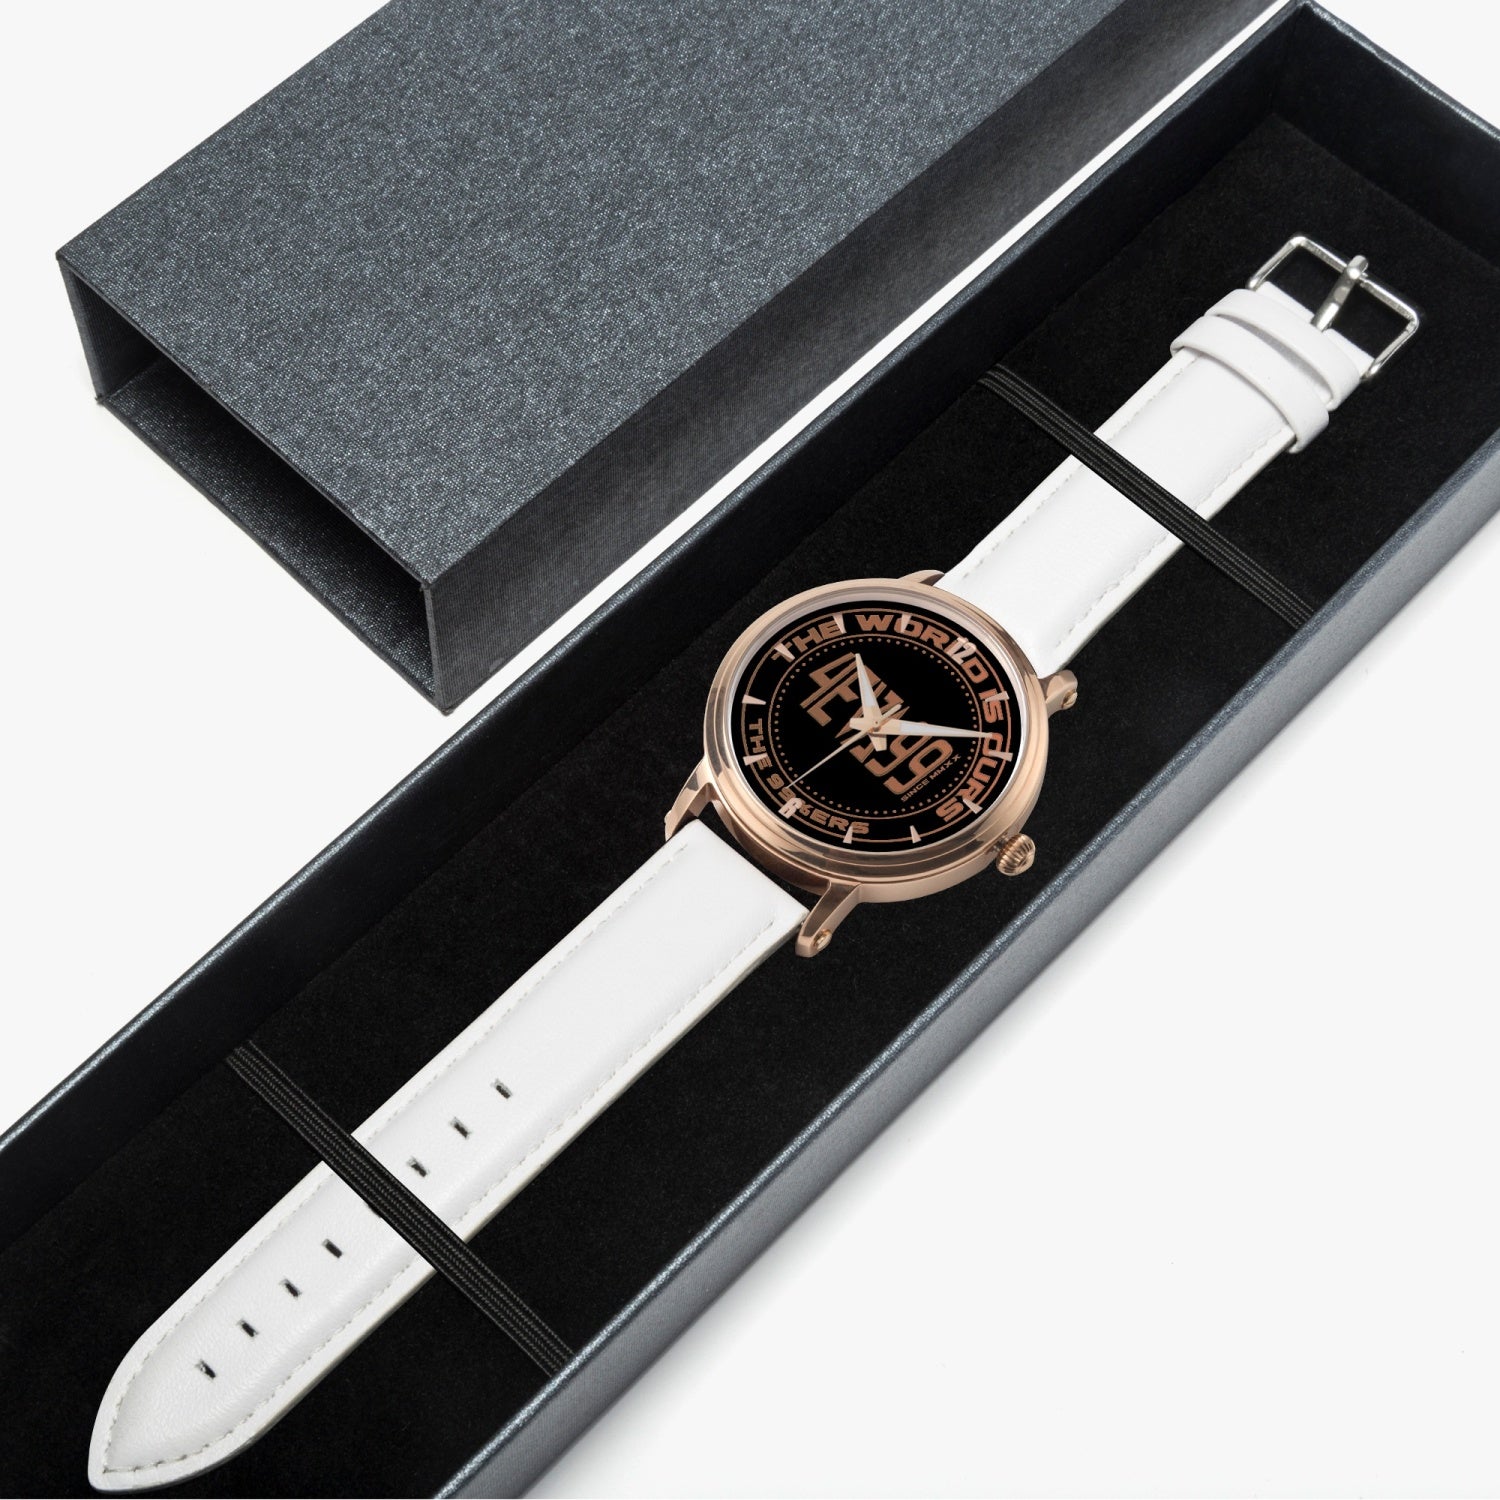 EMBLEM 158. 46mm Unisex Automatic Watch (Rose Gold)